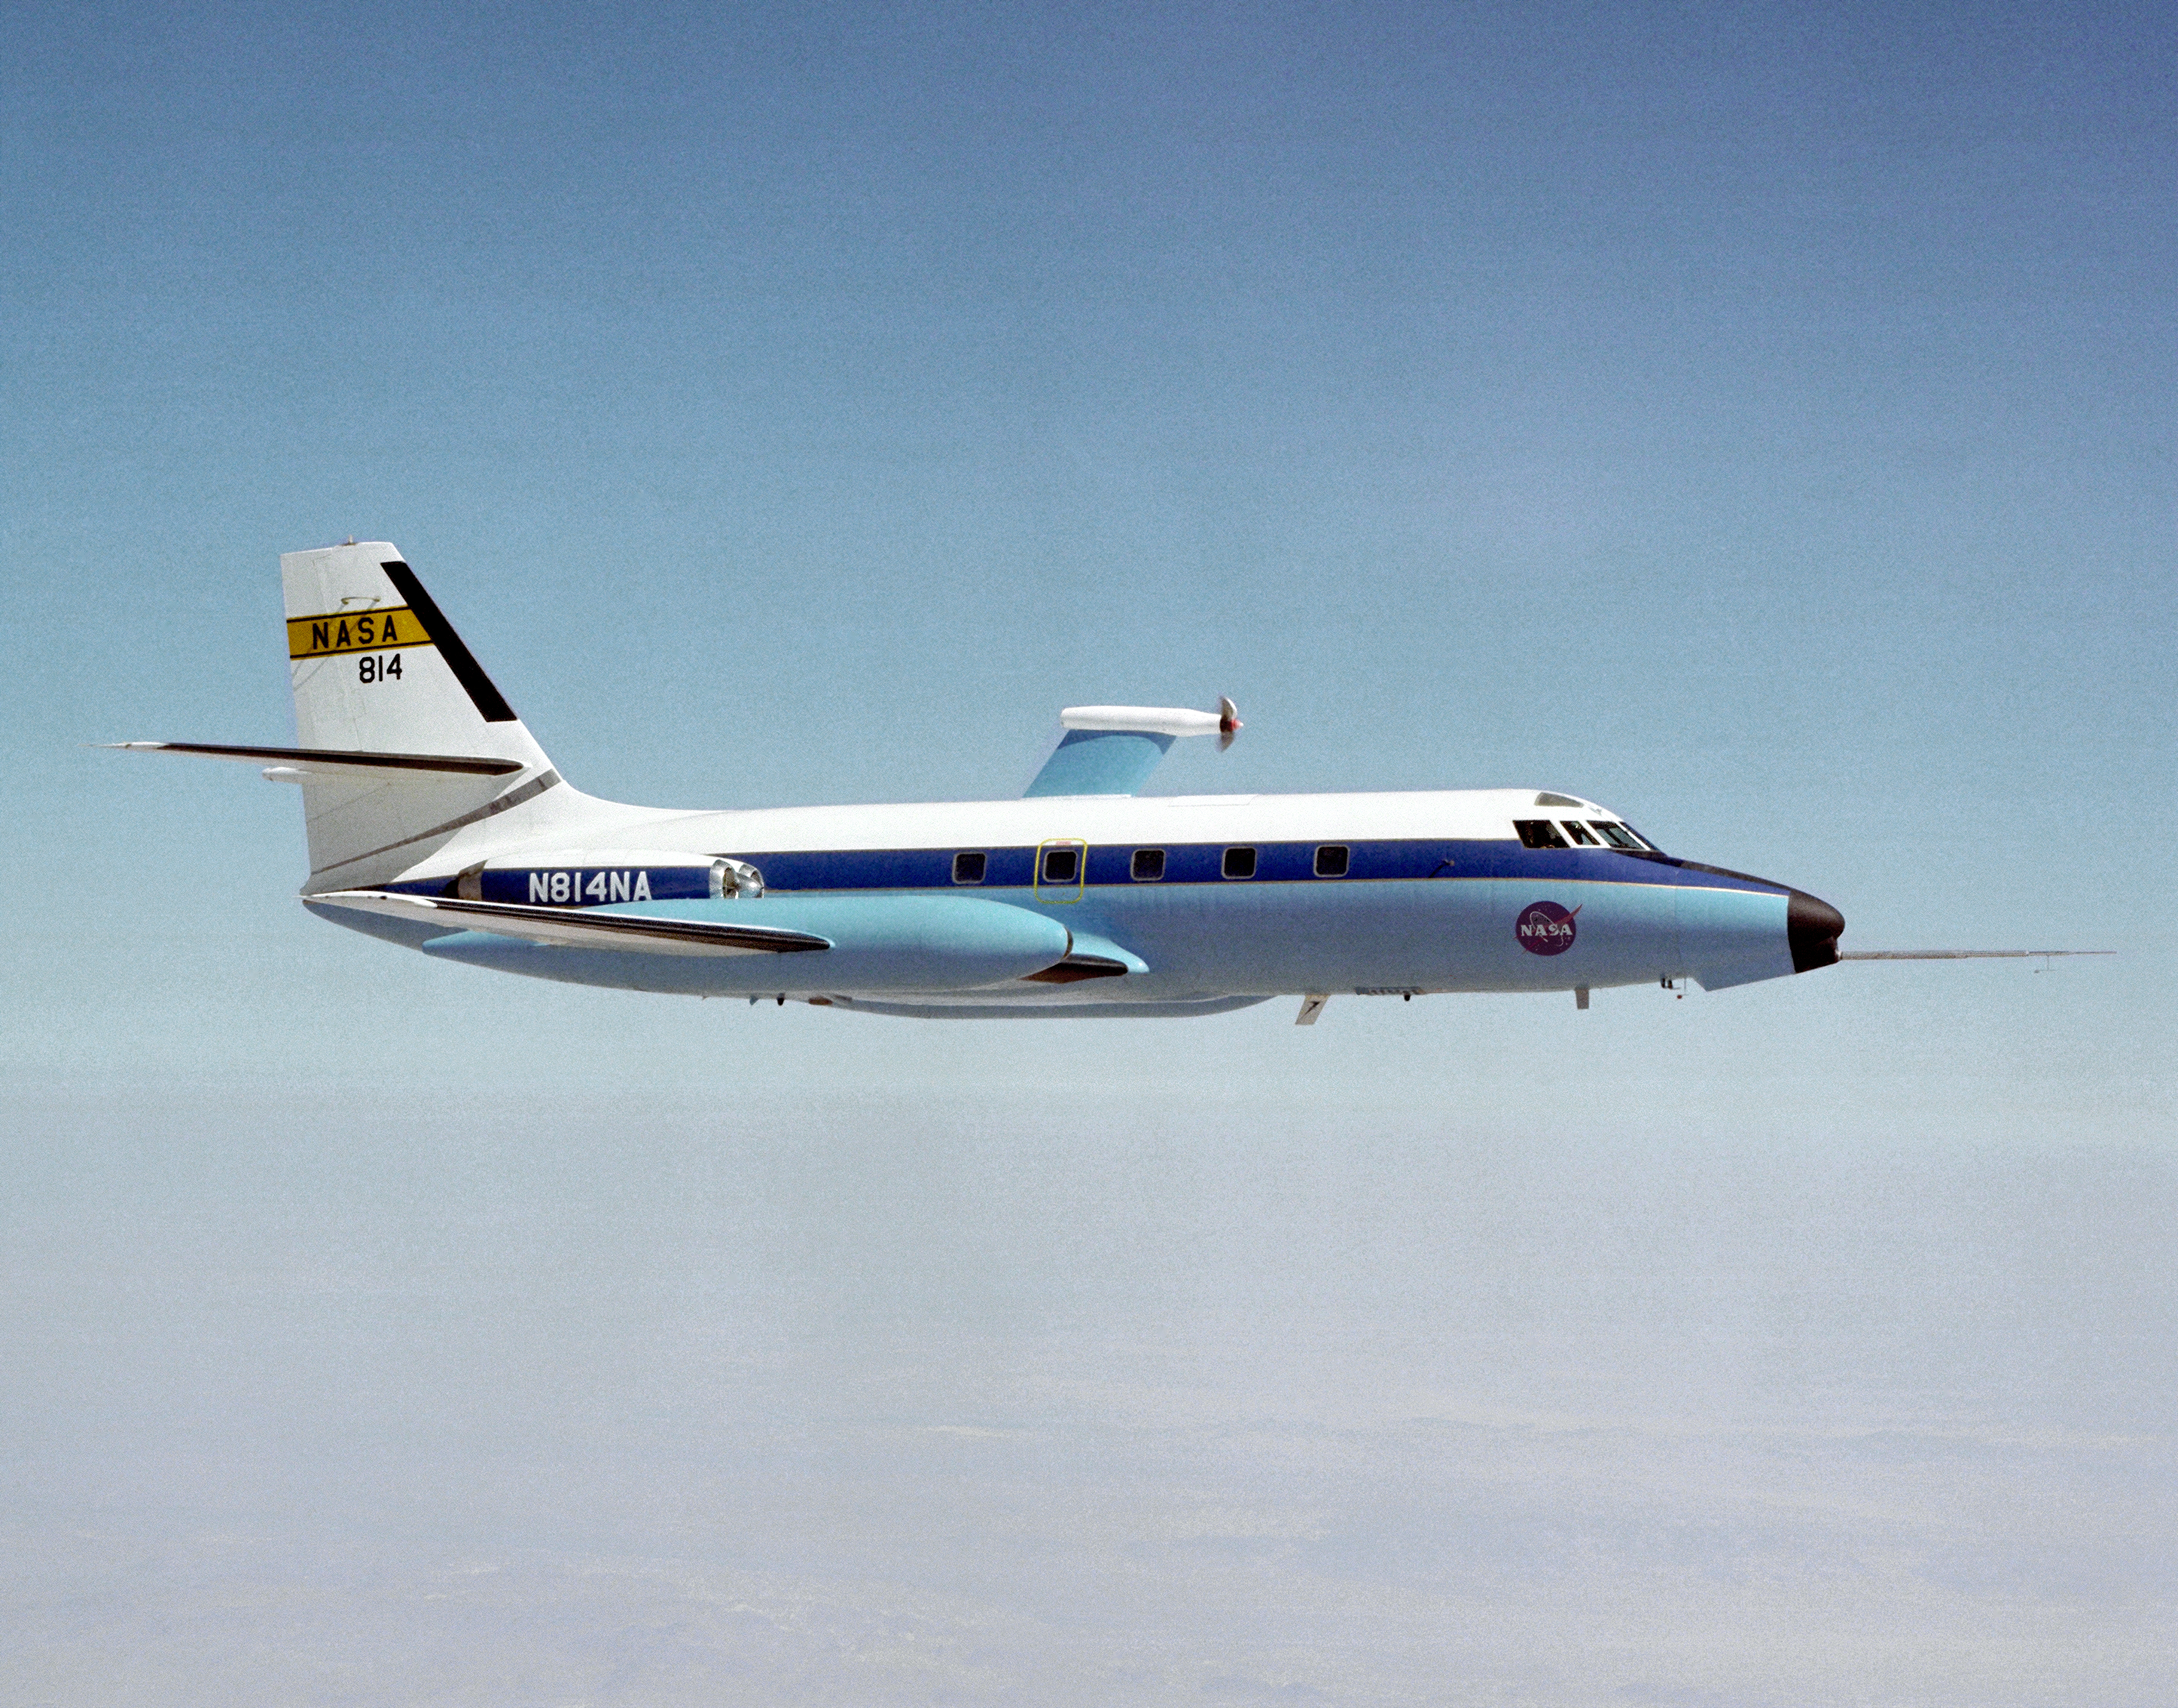 https://upload.wikimedia.org/wikipedia/commons/0/07/NASA_C-140_JetStar_propfan_testbed_at_Dryden_1981.jpg